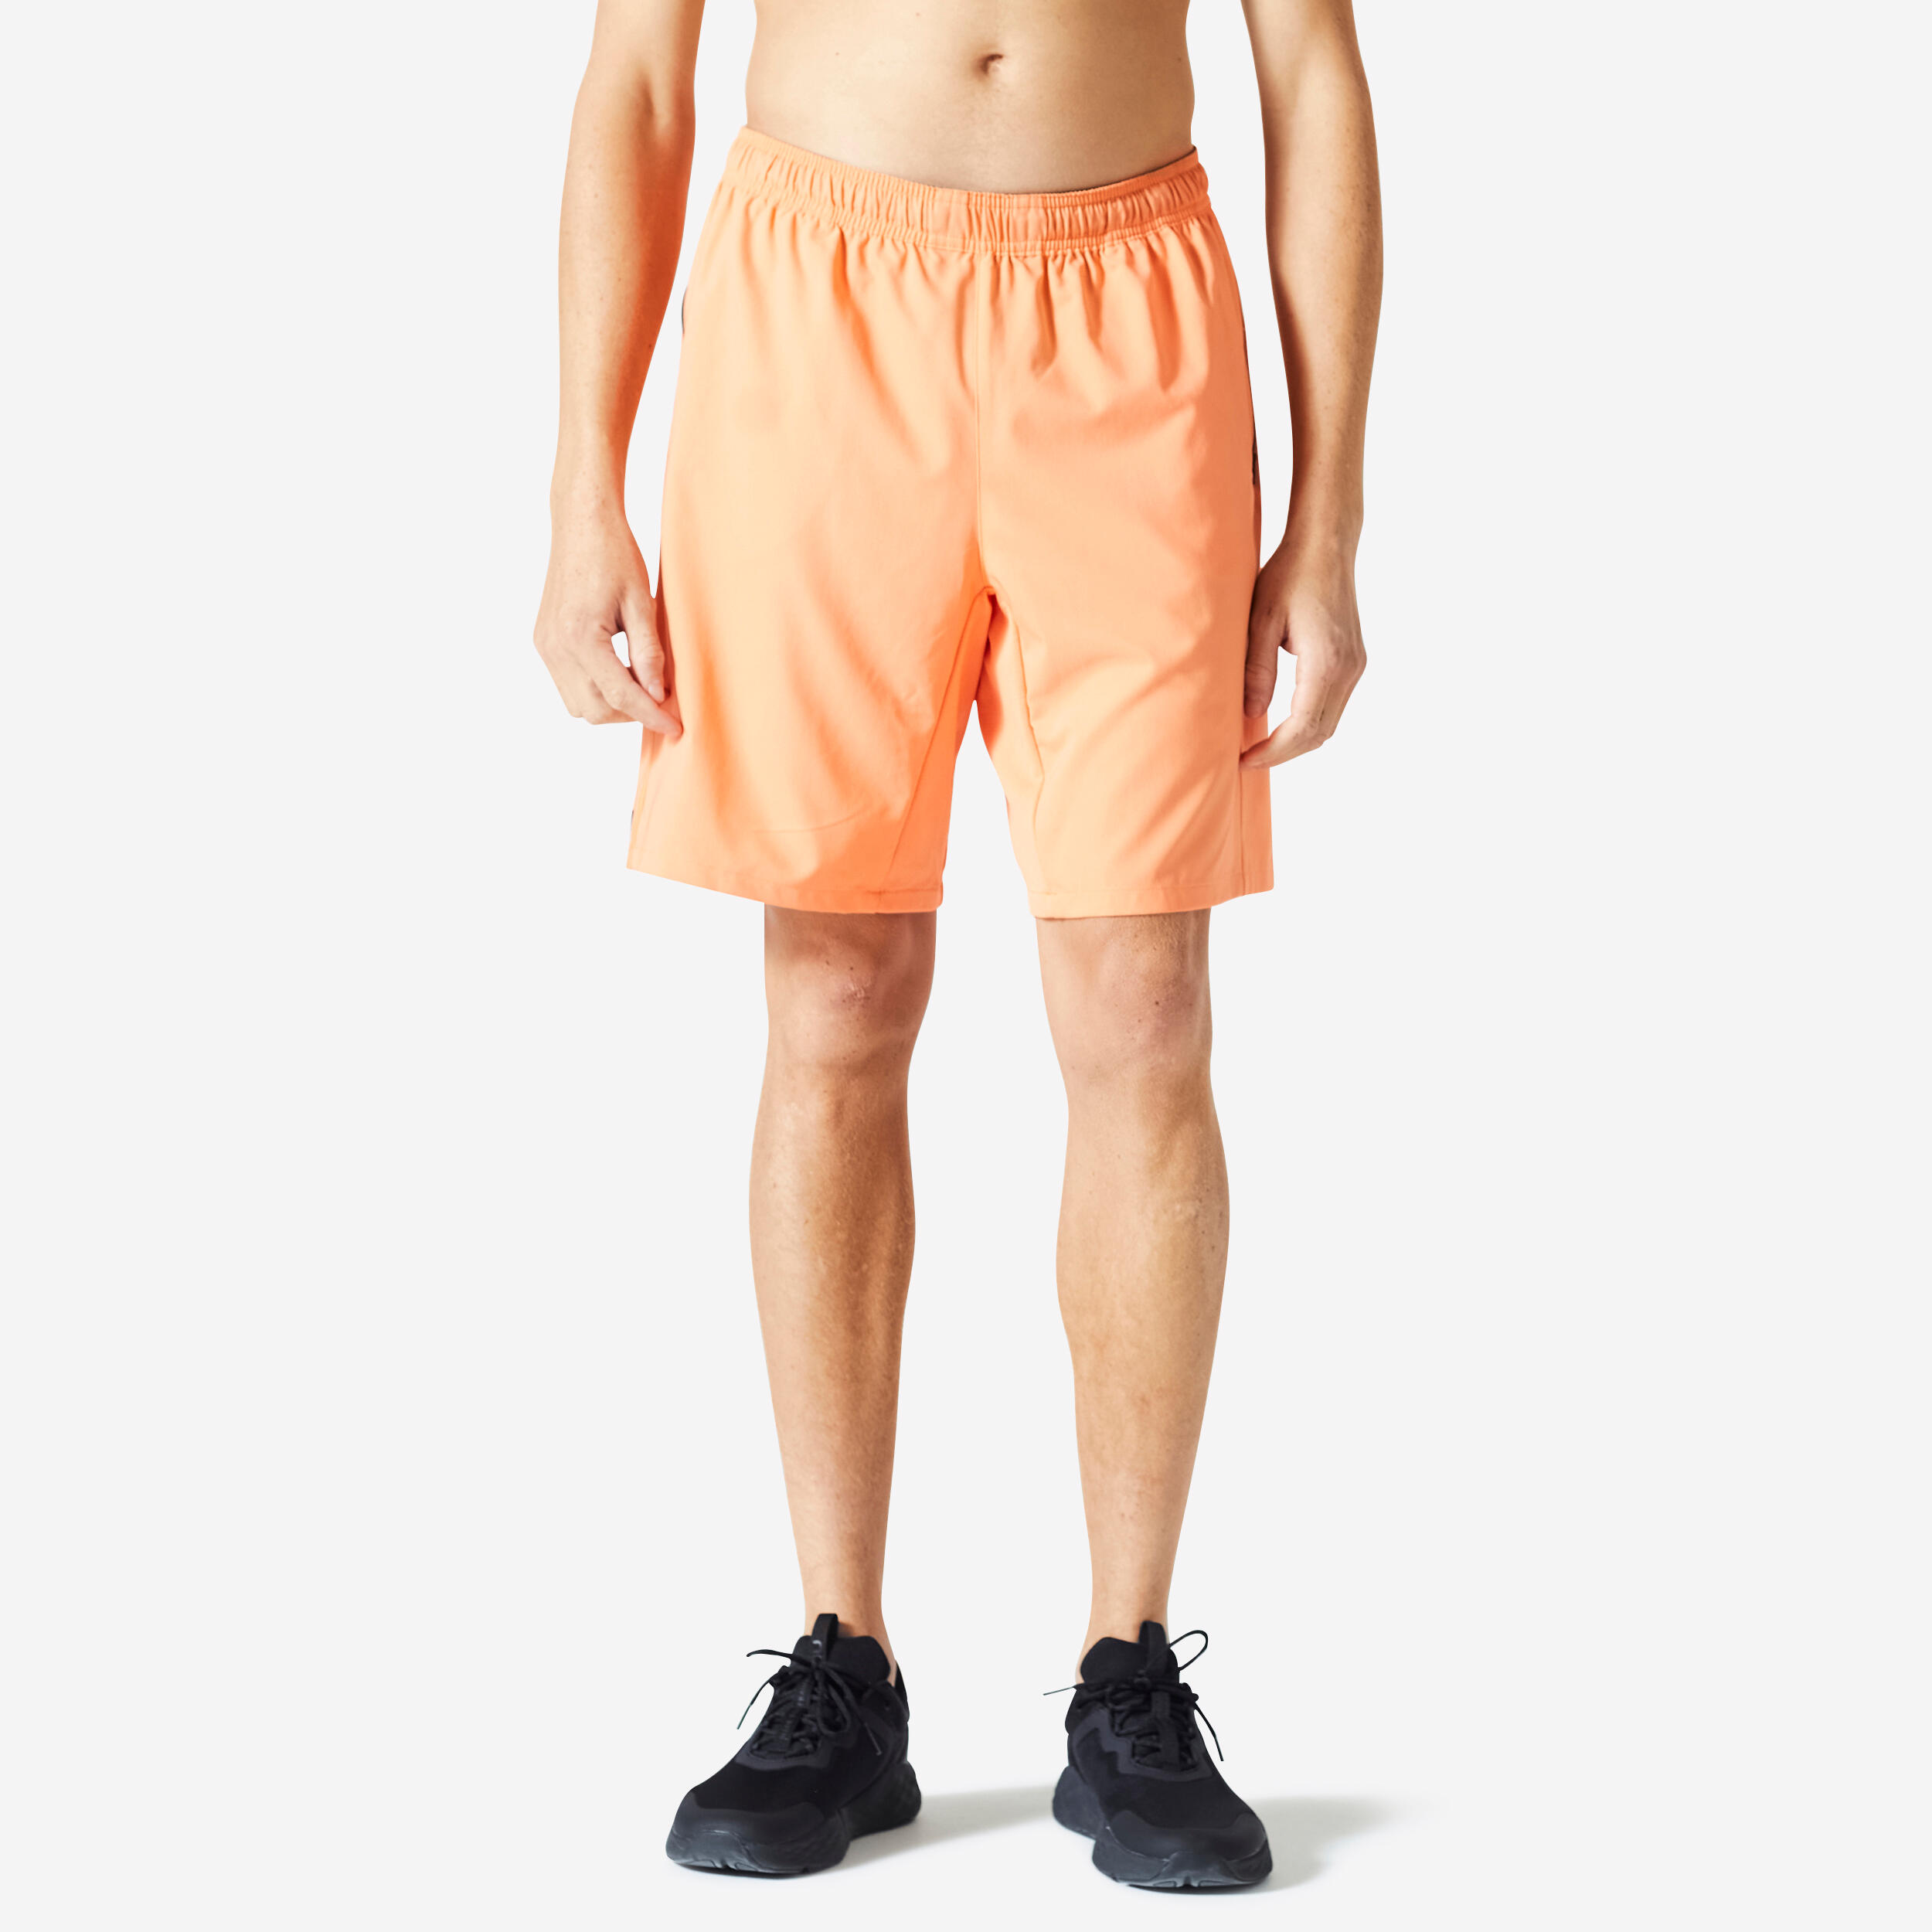 Men's Fitness Shorts With Zipper Pockets - Orange